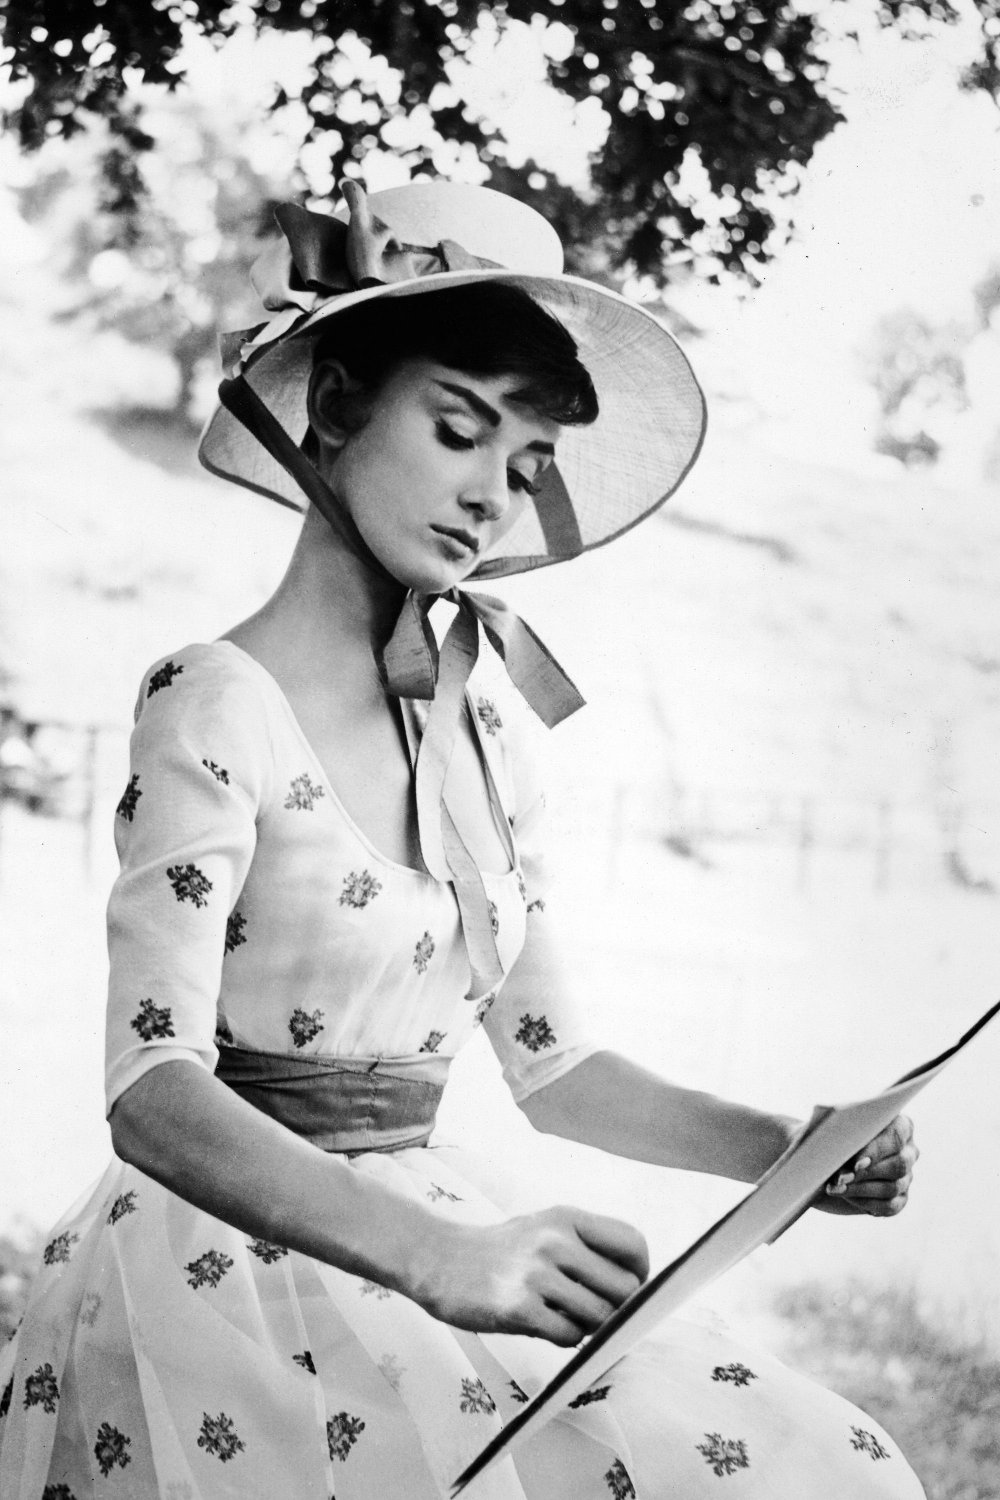 Audrey Hepburn  13"x19" (32cm/49cm) Polyester Fabric Poster